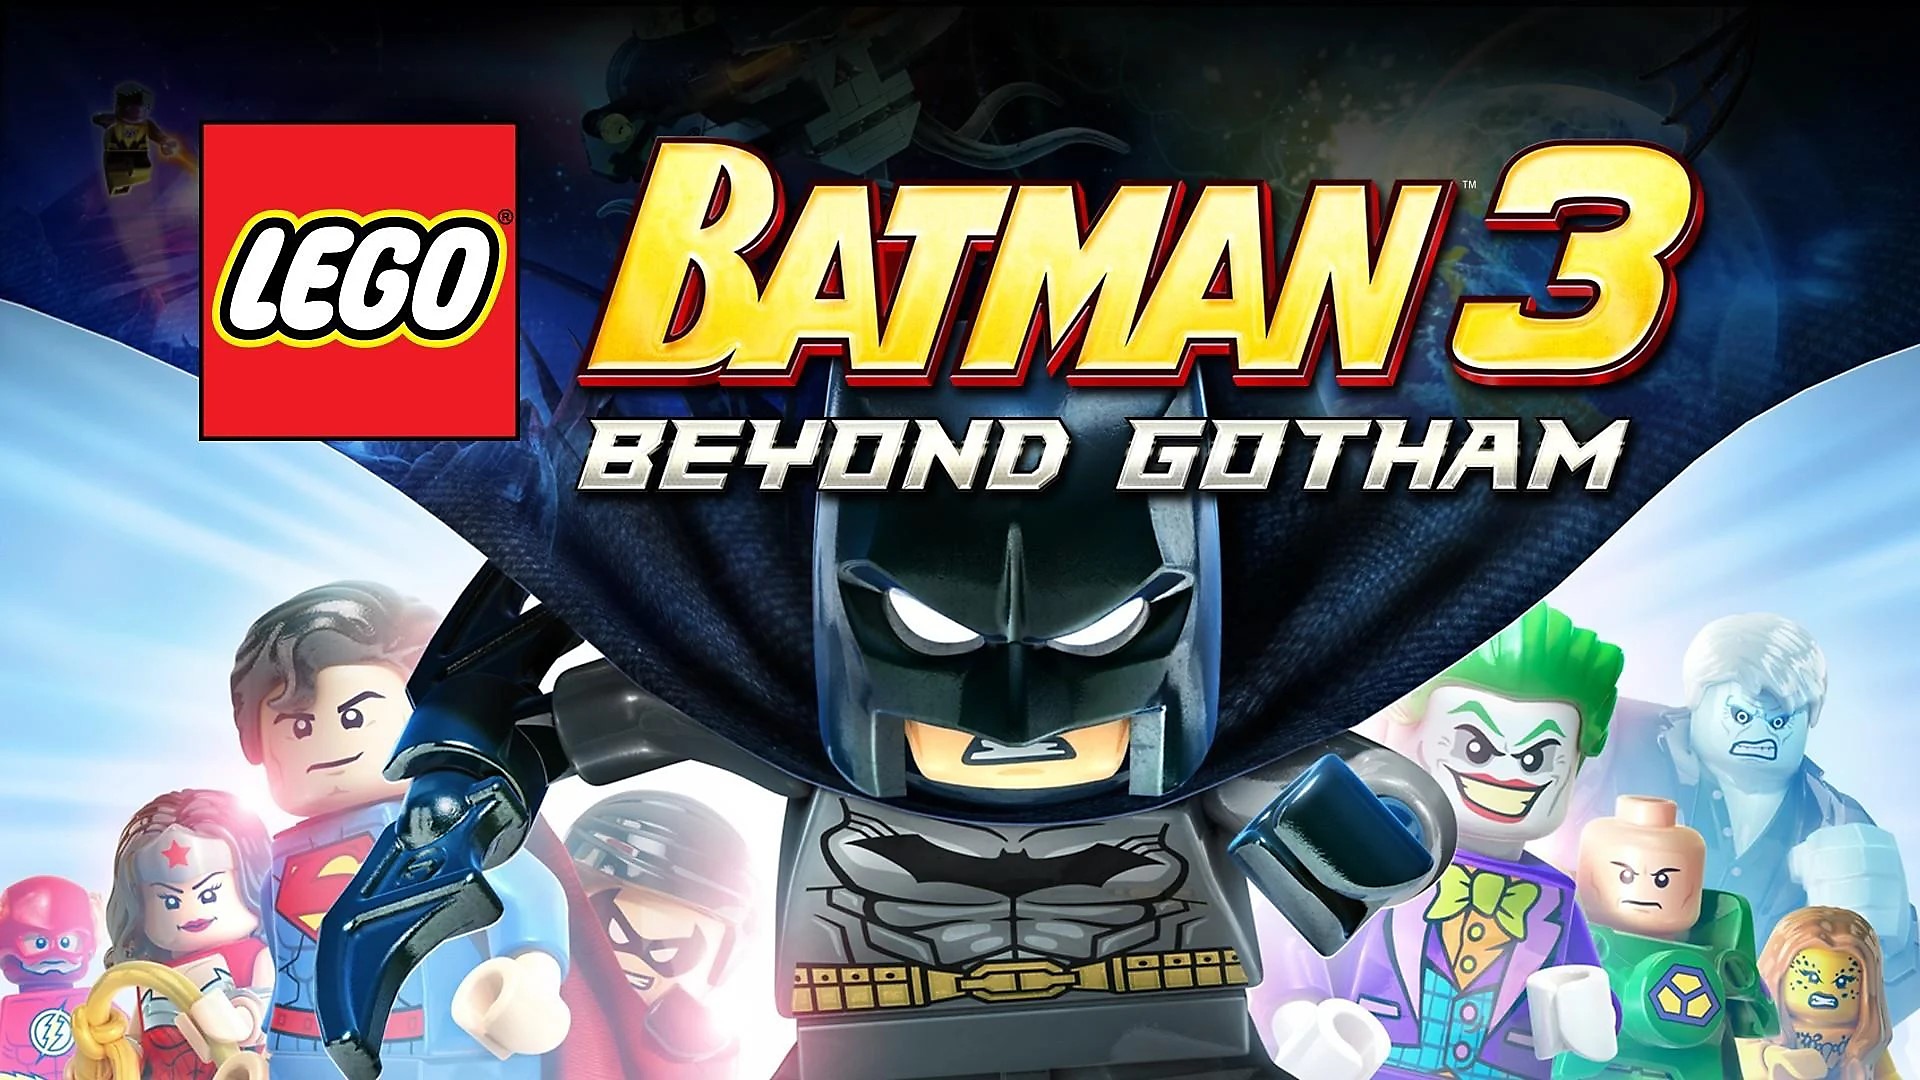 LEGO Batman 3: Beyond Gotham-trailer | E3 2014 | PS4, PS3 & PS Vita